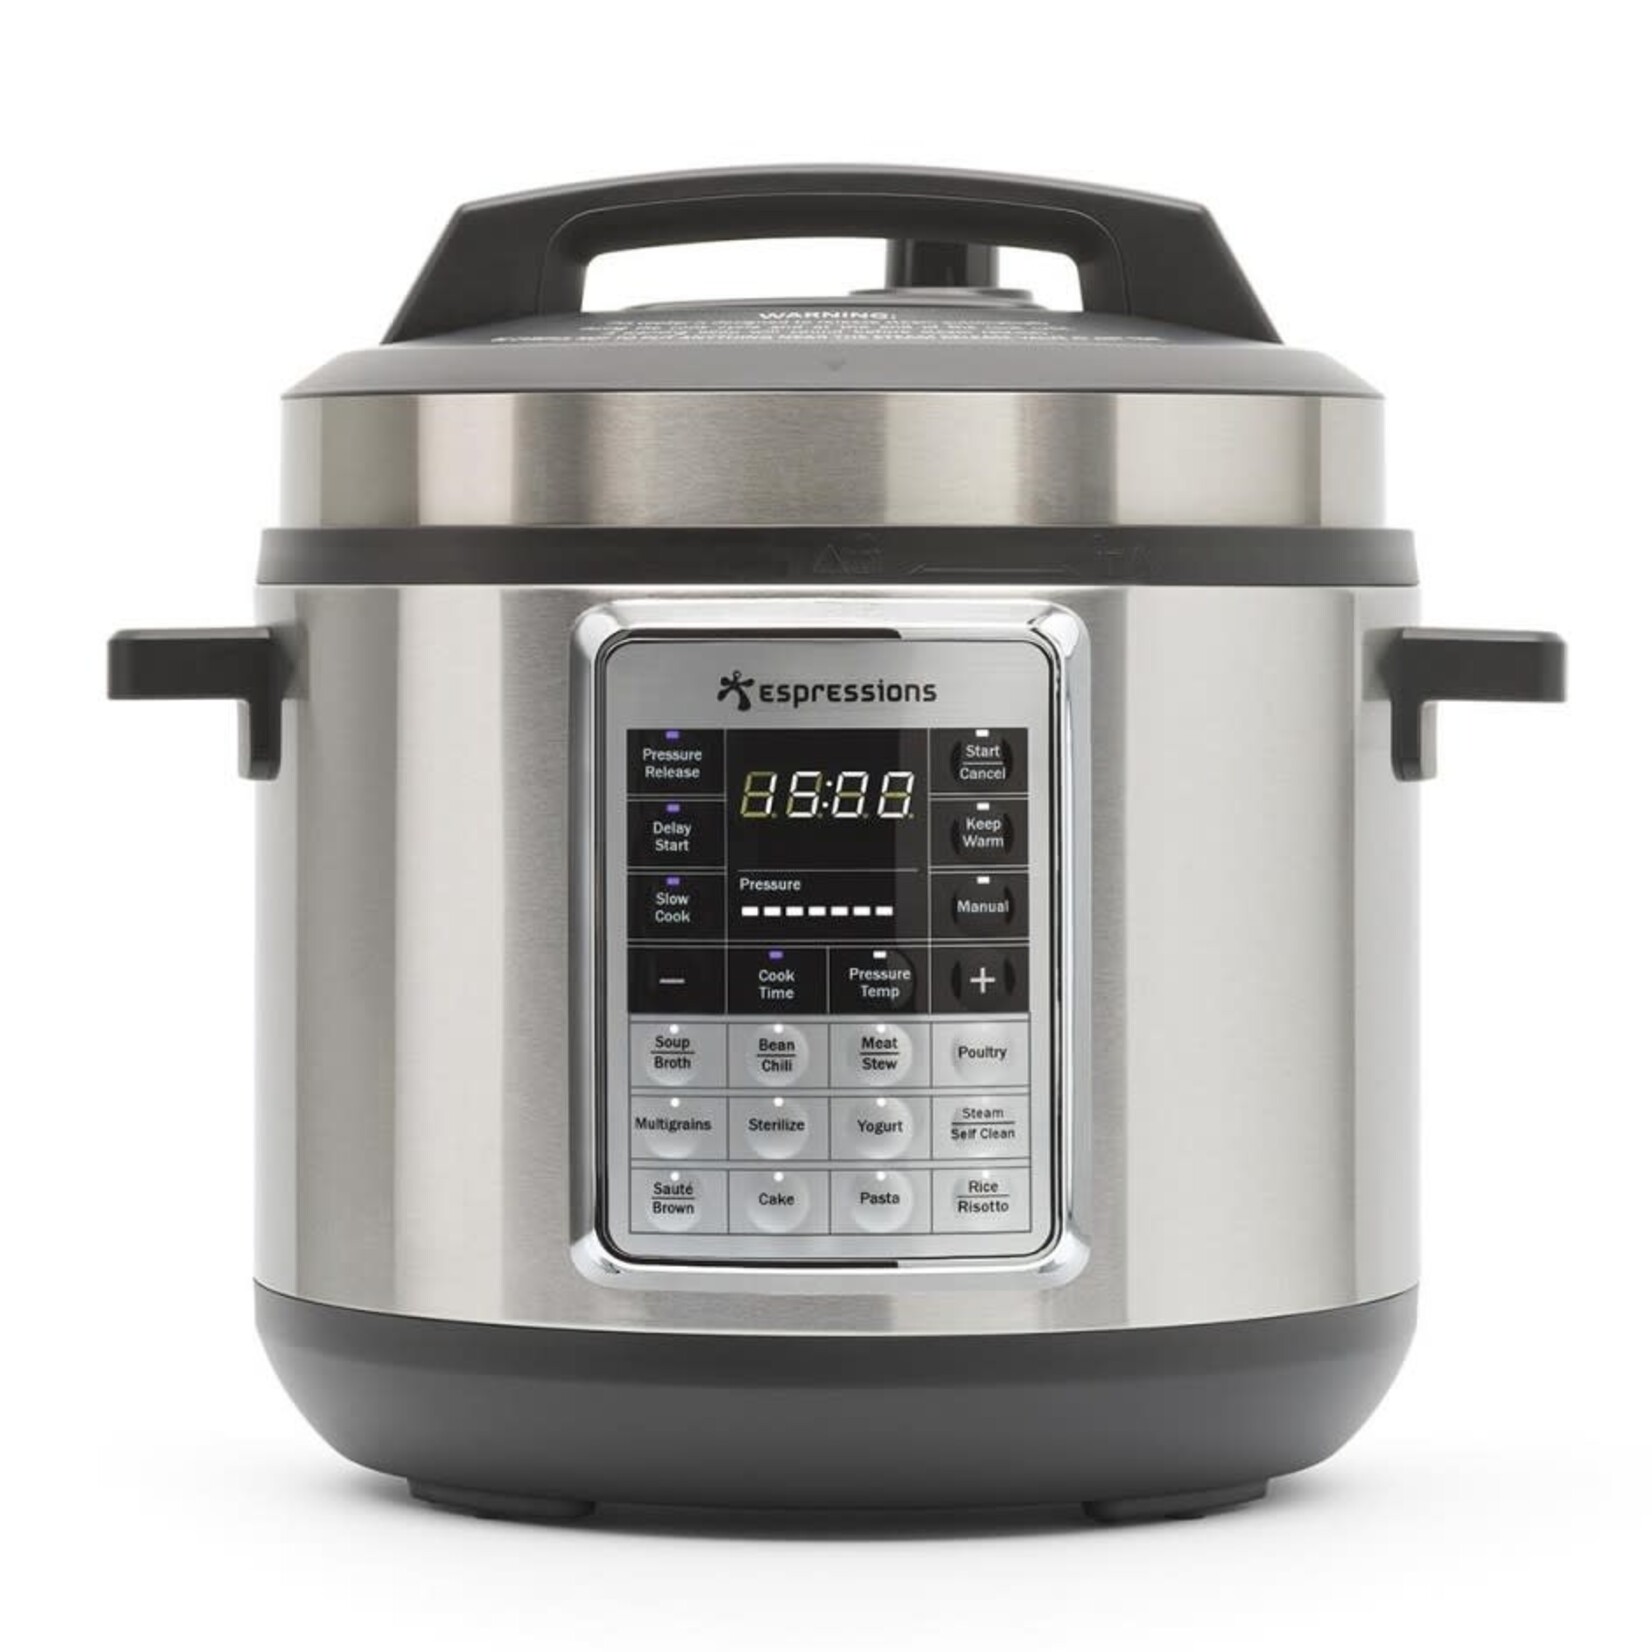 Espressions rvs 14 programma's Slowcooker Smart Pressure Cooker Espressions ep6000